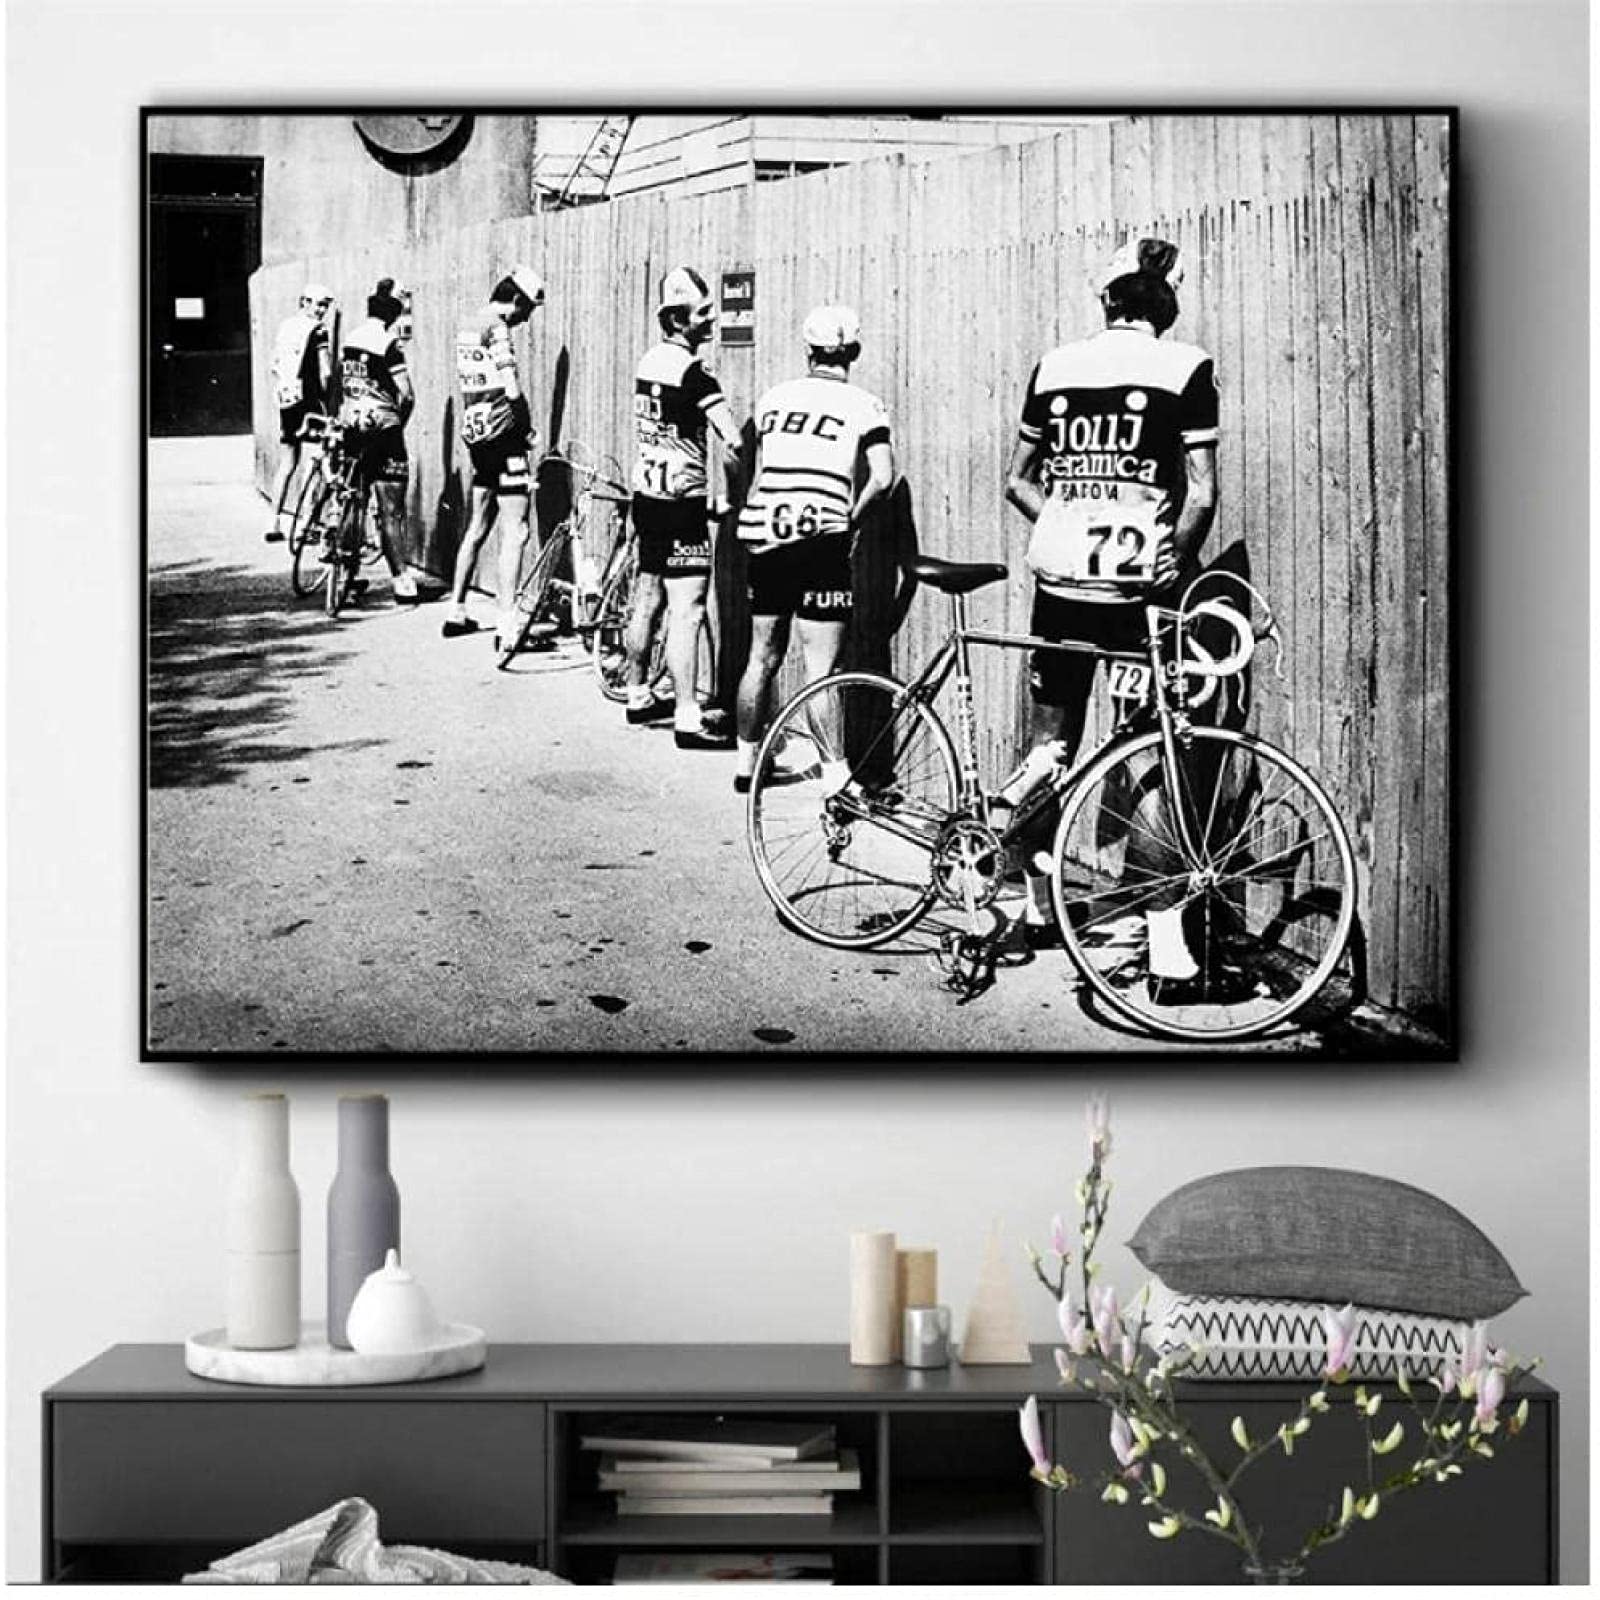 LangGe Wandbild 50x60cm Rahmenlose Retro Fahrrad Foto Leinwand Poster Schwarz-weiß Badezimmer Dekoration Herren Rennrad Wandkunst Bild